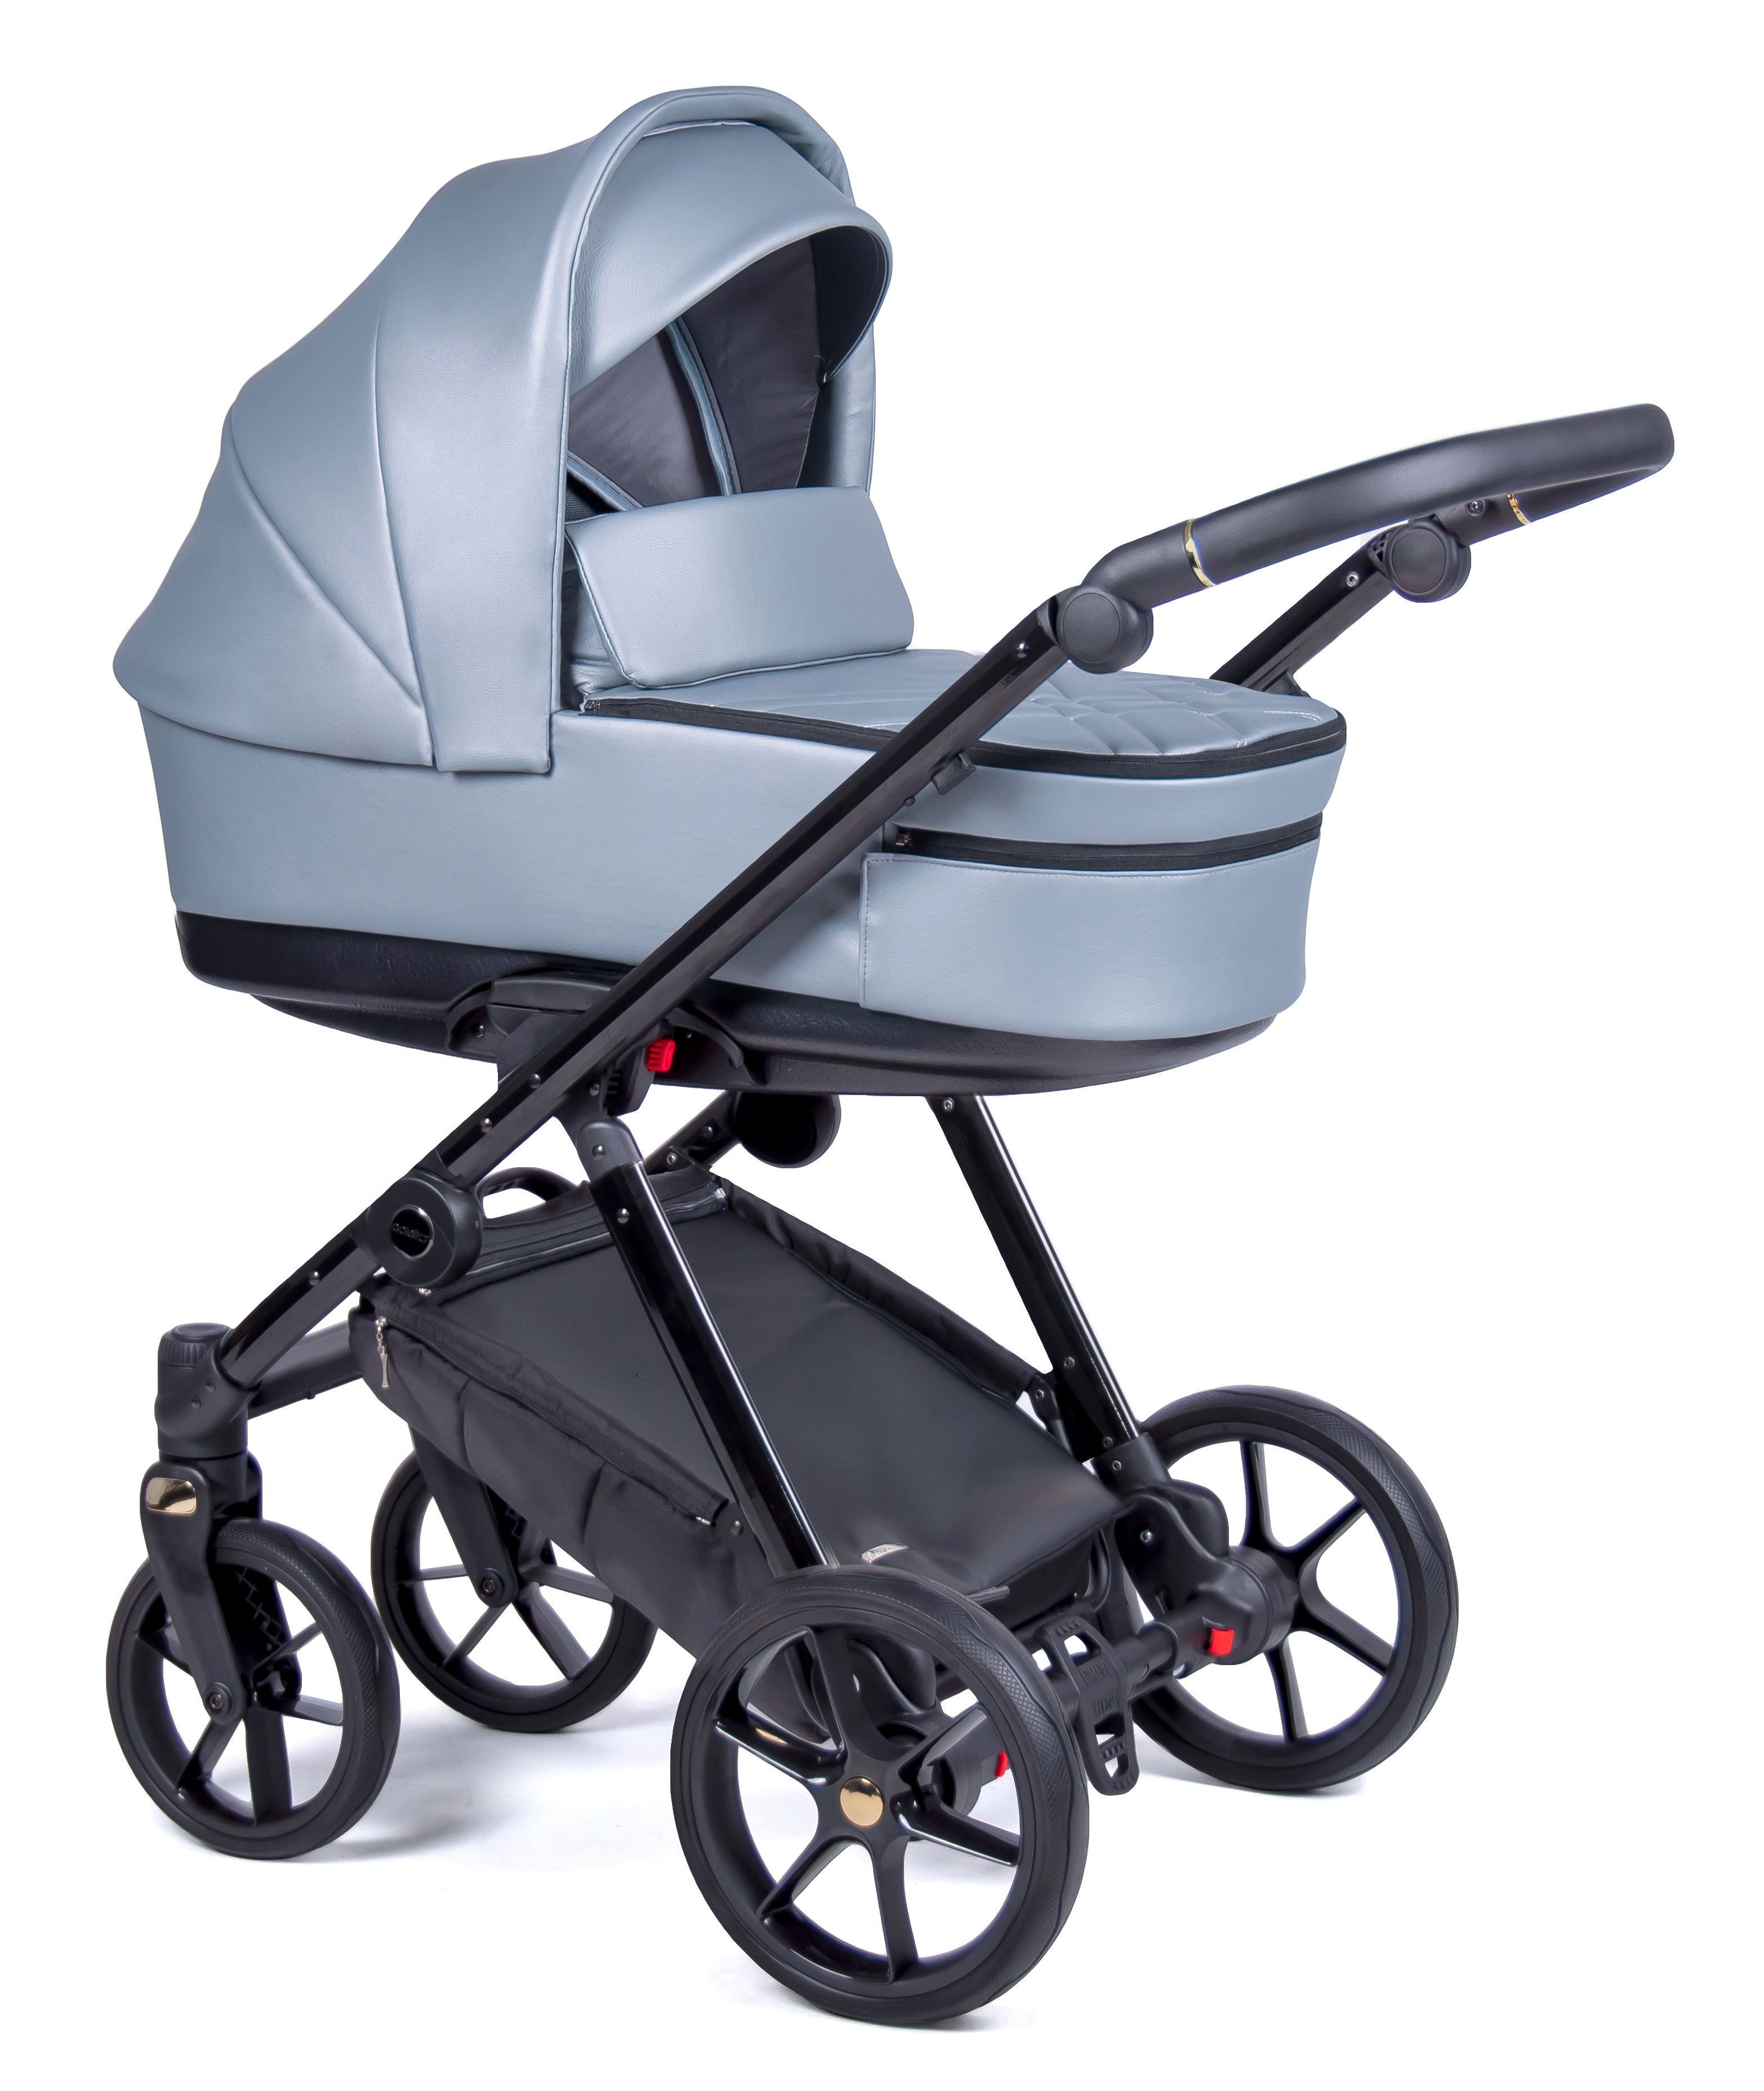 12 15 in Axxis 1 3 - Gestell Oceanblau babies-on-wheels schwarz Designs in - Teile Premium Kinderwagen-Set = Kombi-Kinderwagen